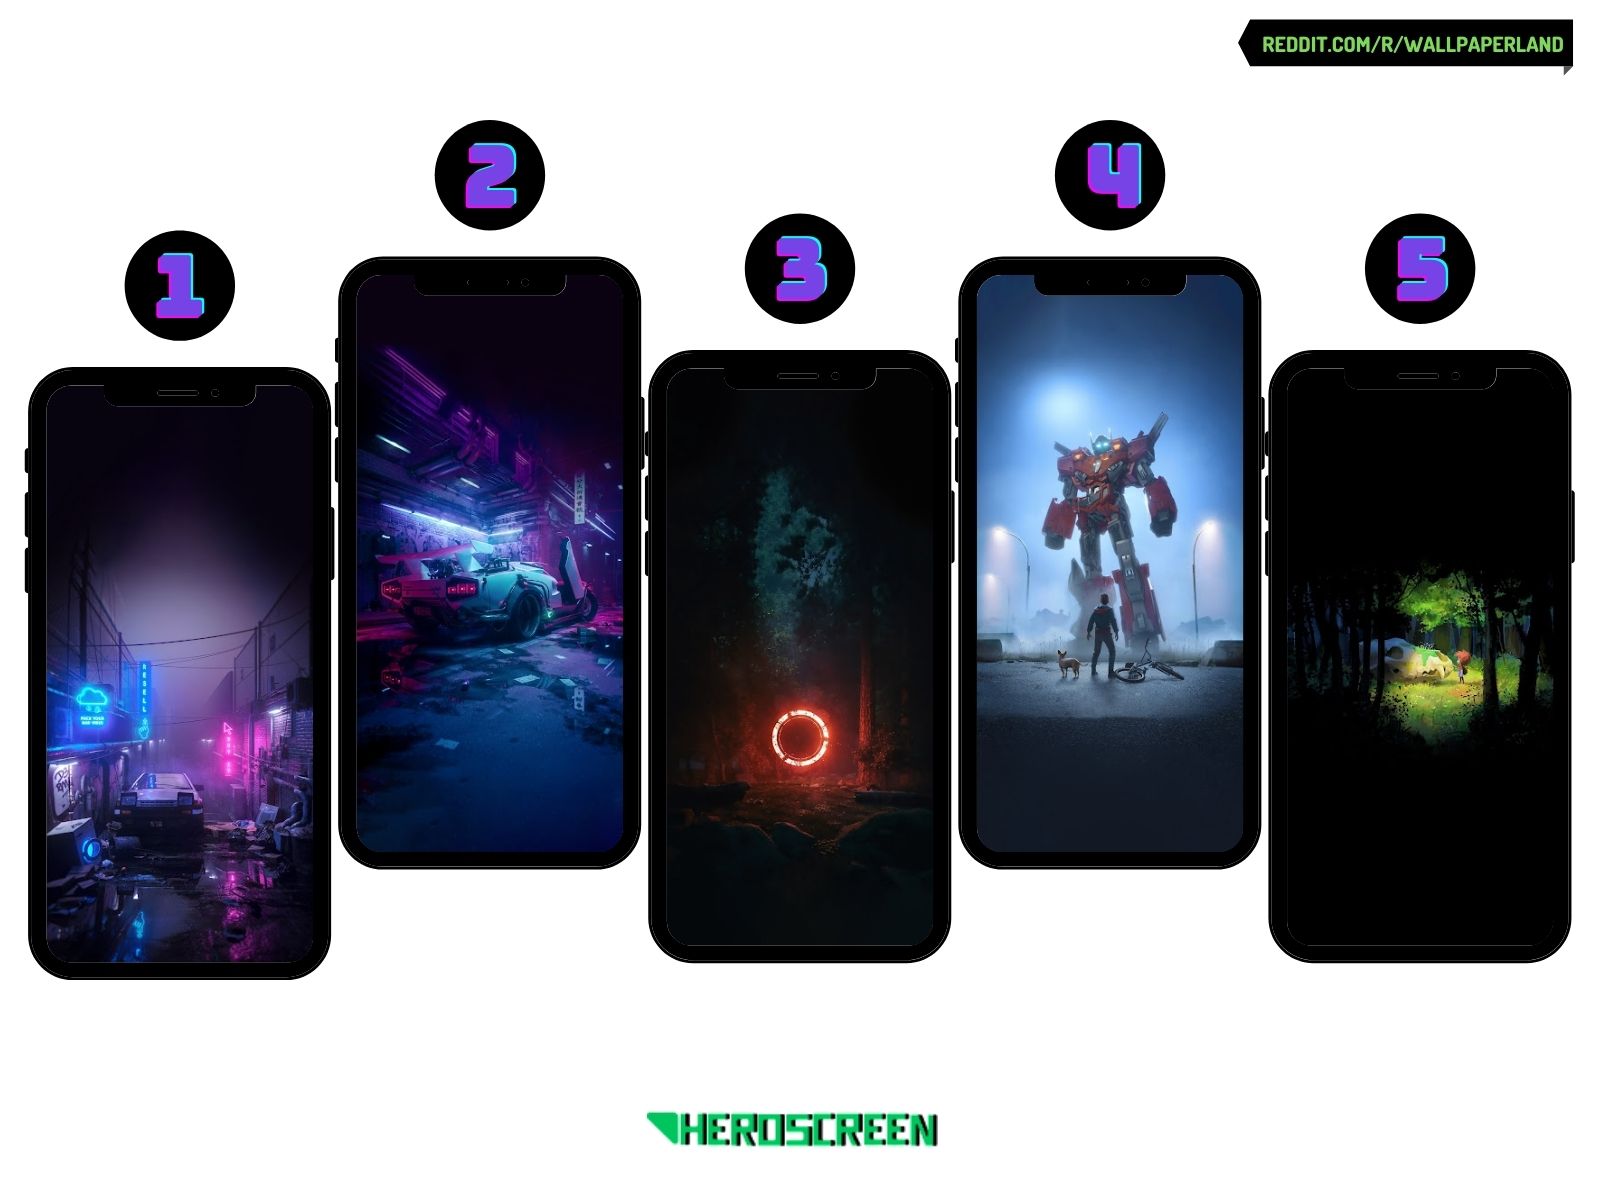 Cyberpunk phone wallpapers, HeroScreen - Cool Wallpapers